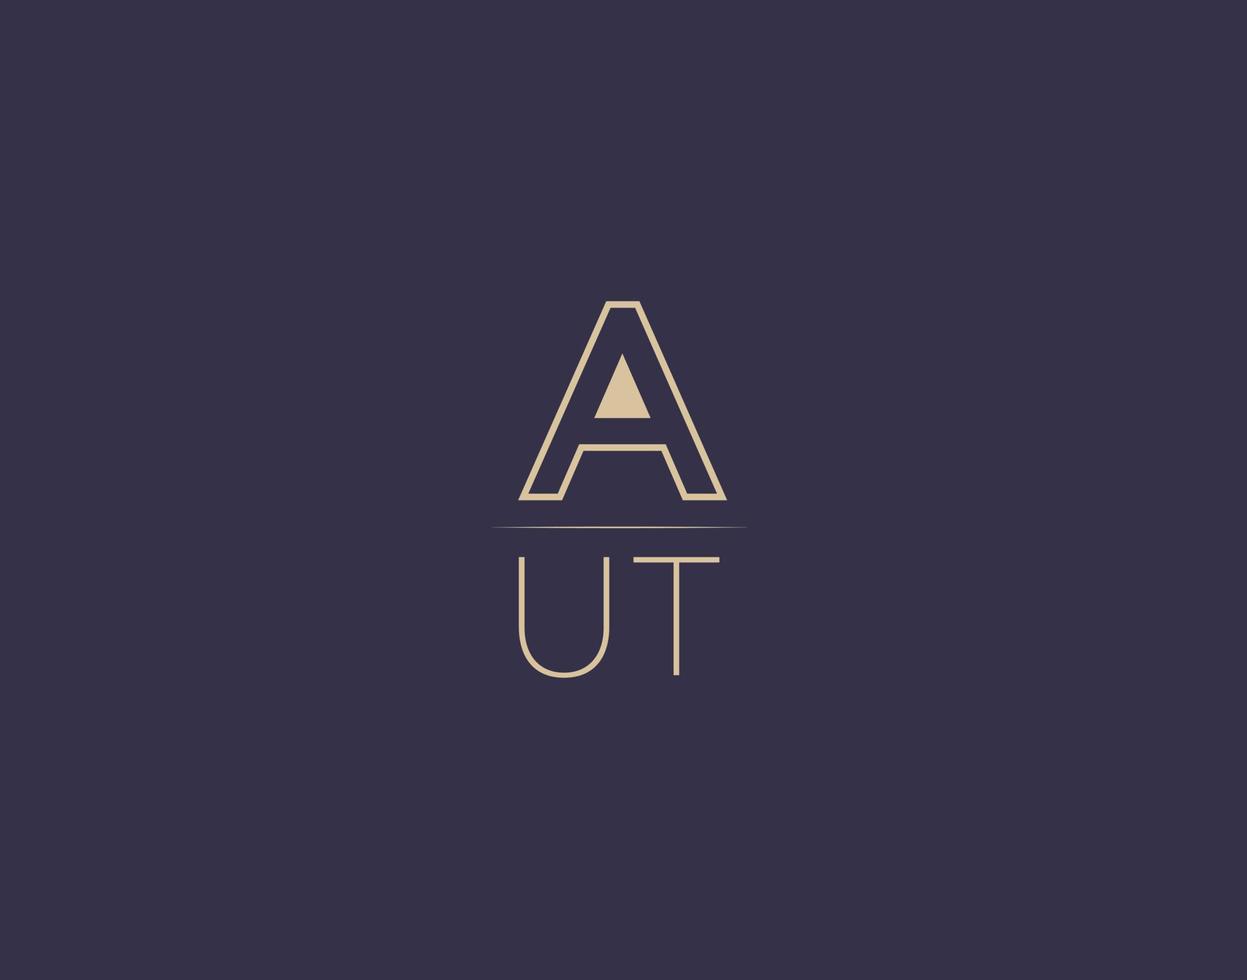 AUT letter logo design modern minimalist vector images